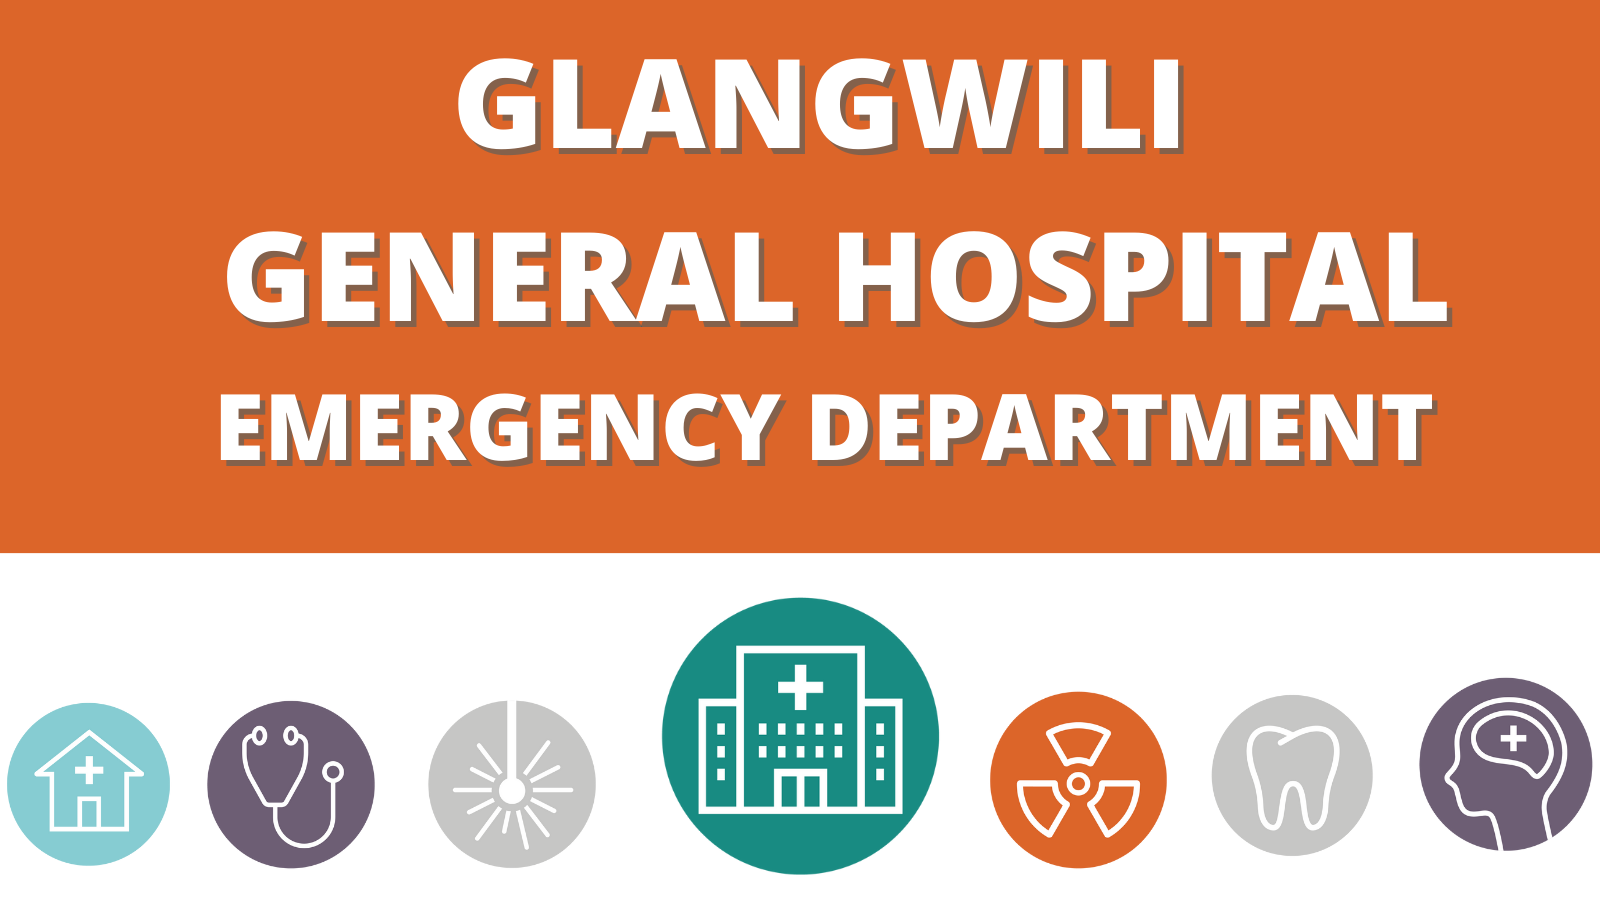 Glangwili General Hospital - Emergency Department